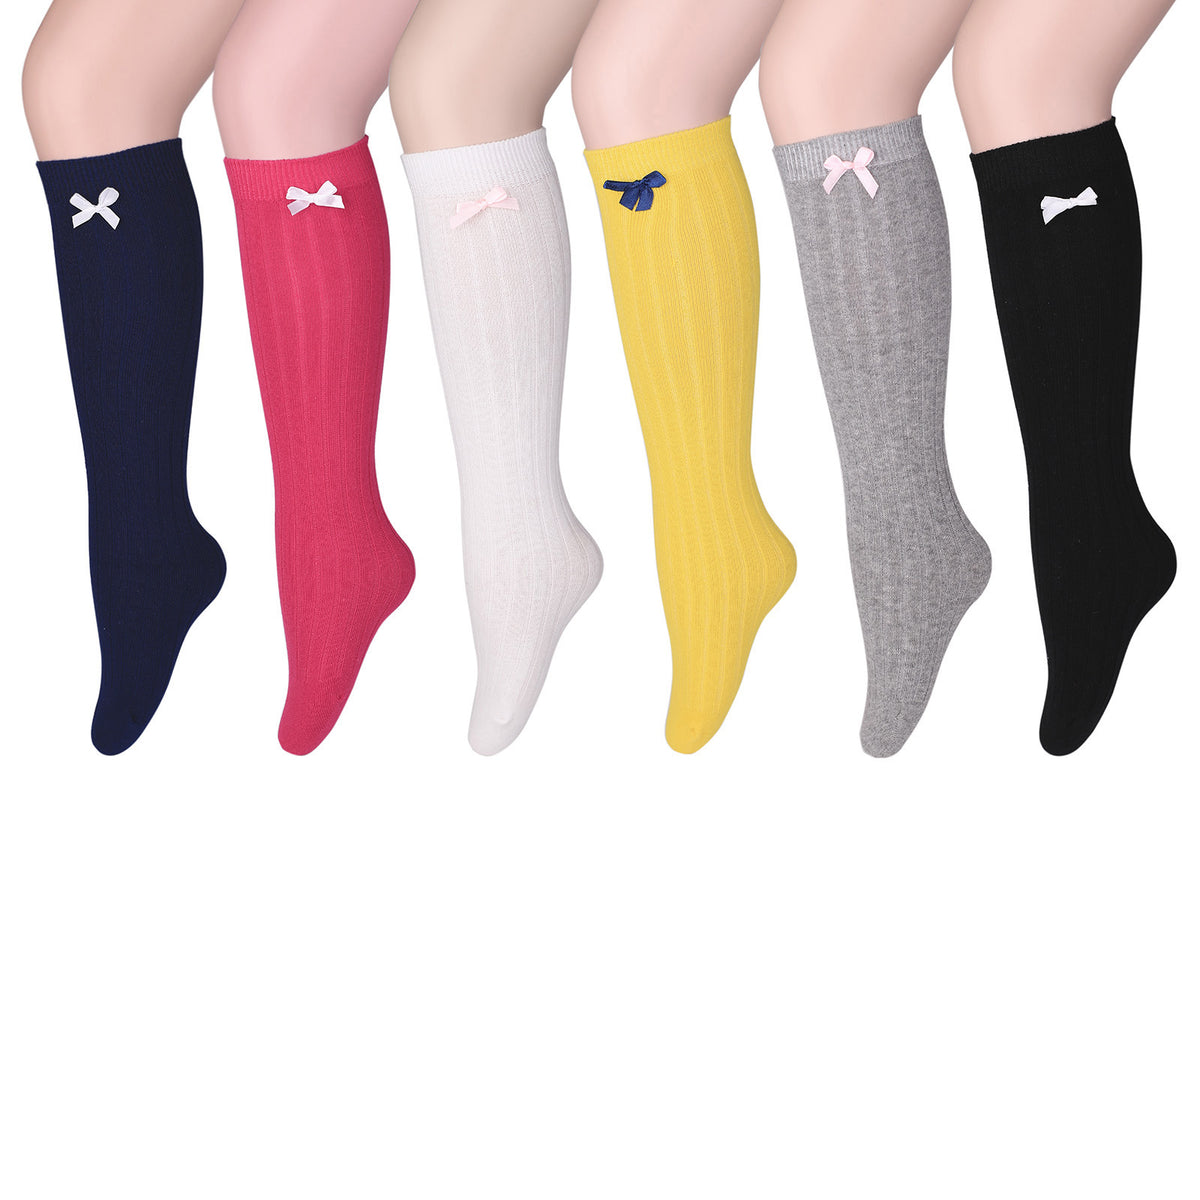 ana arvelo recommends girls in tube socks pic